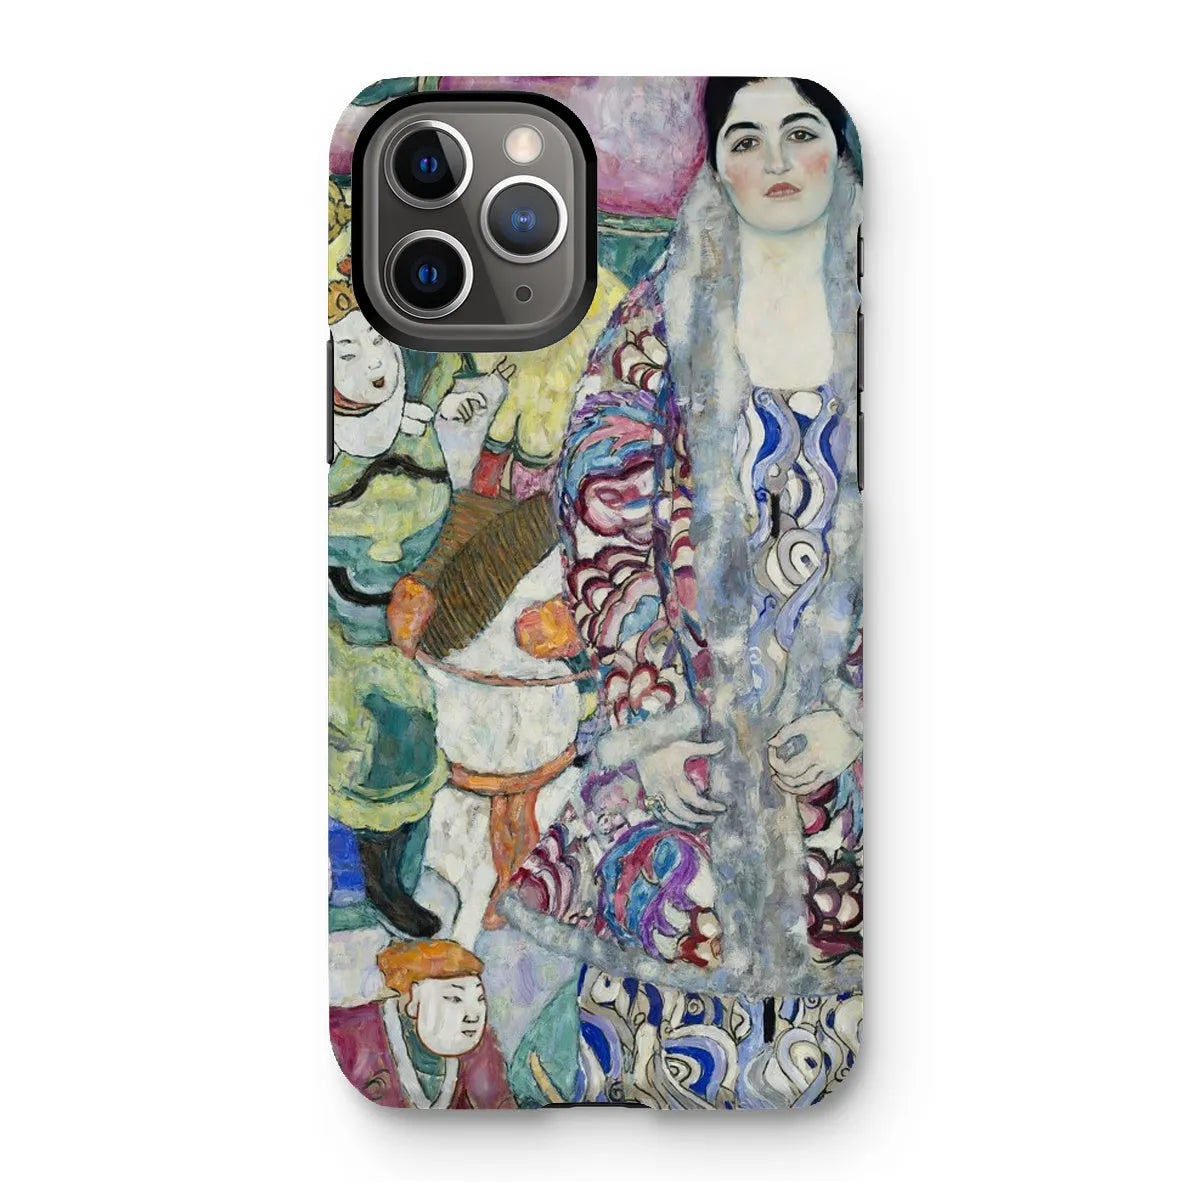 Friederike Maria Beer - Viennese Art Phone Case - Gustav Klimt - Iphone 11 Pro / Matte - Mobile Phone Cases - Aesthetic